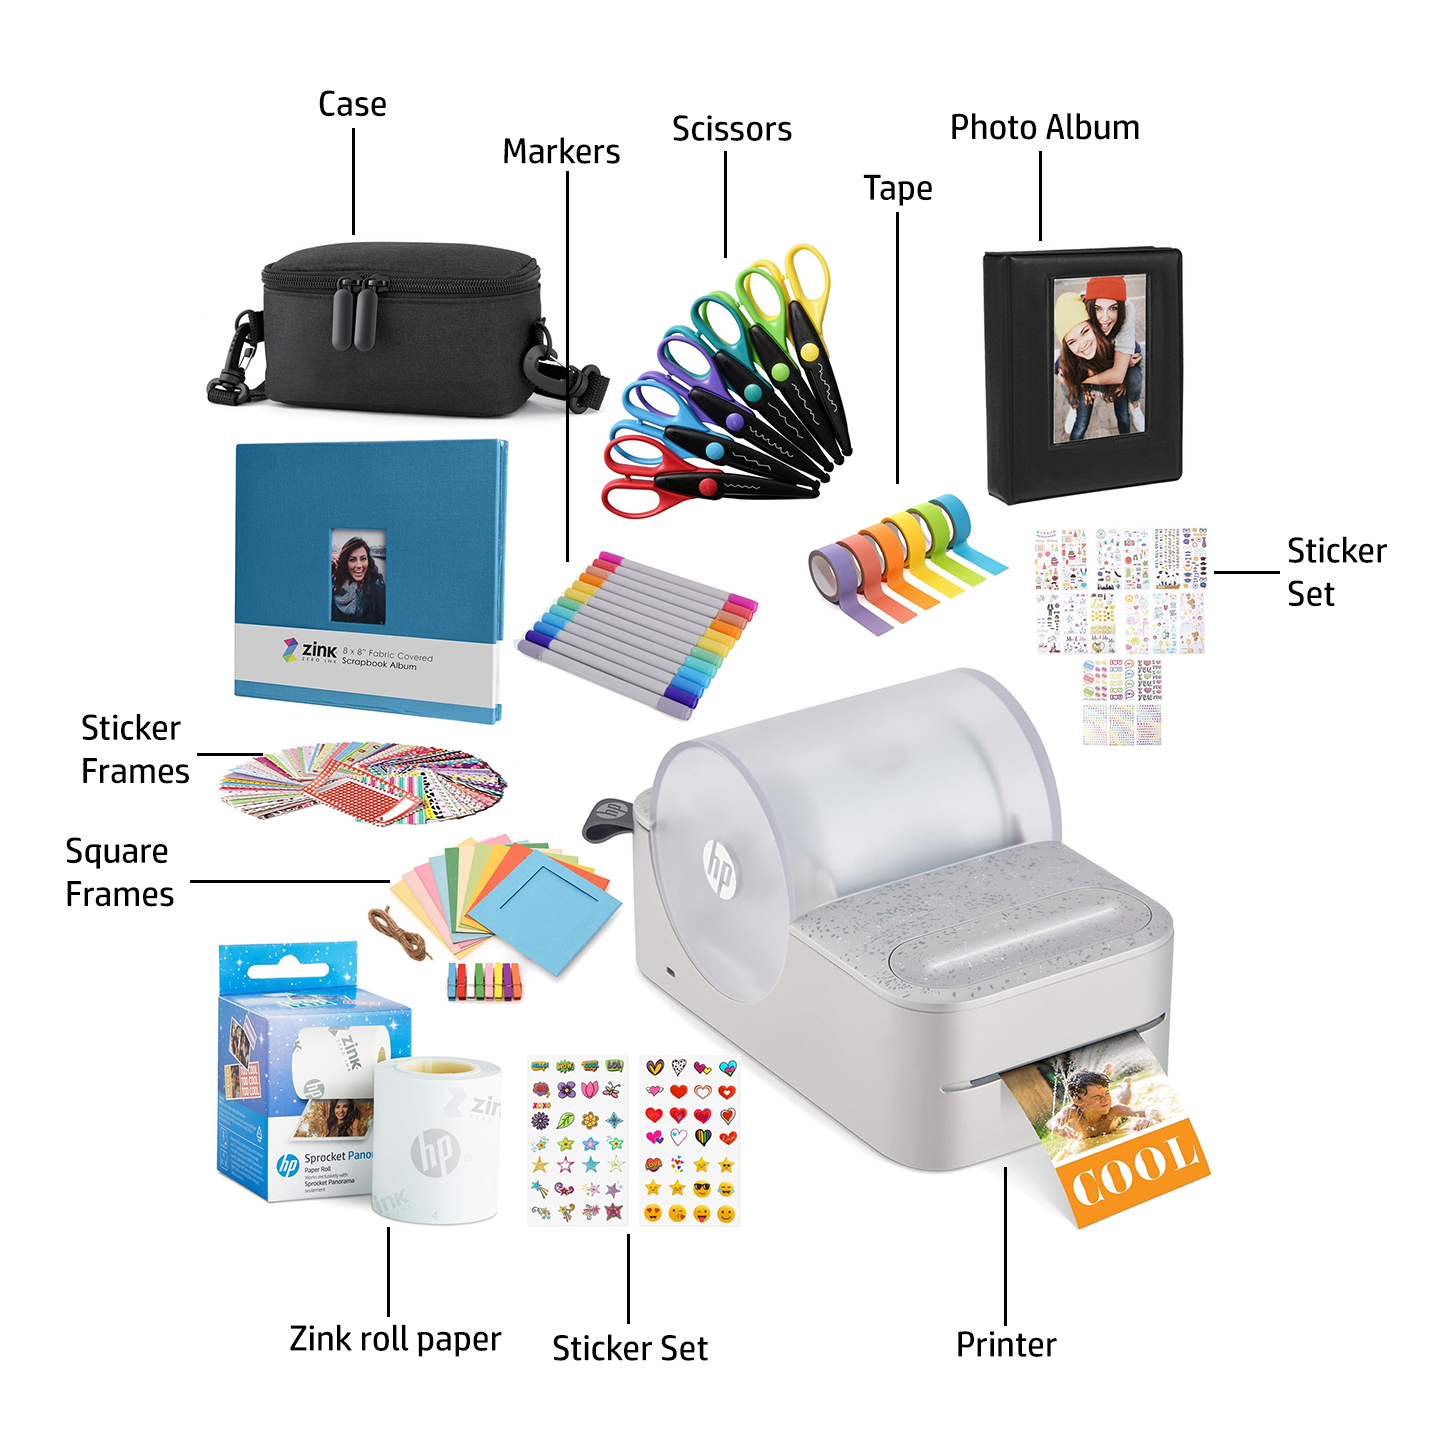 HP Sprocket Panorama Instant Portable Color Label & Photo Printer (Grey) Craft Bundle